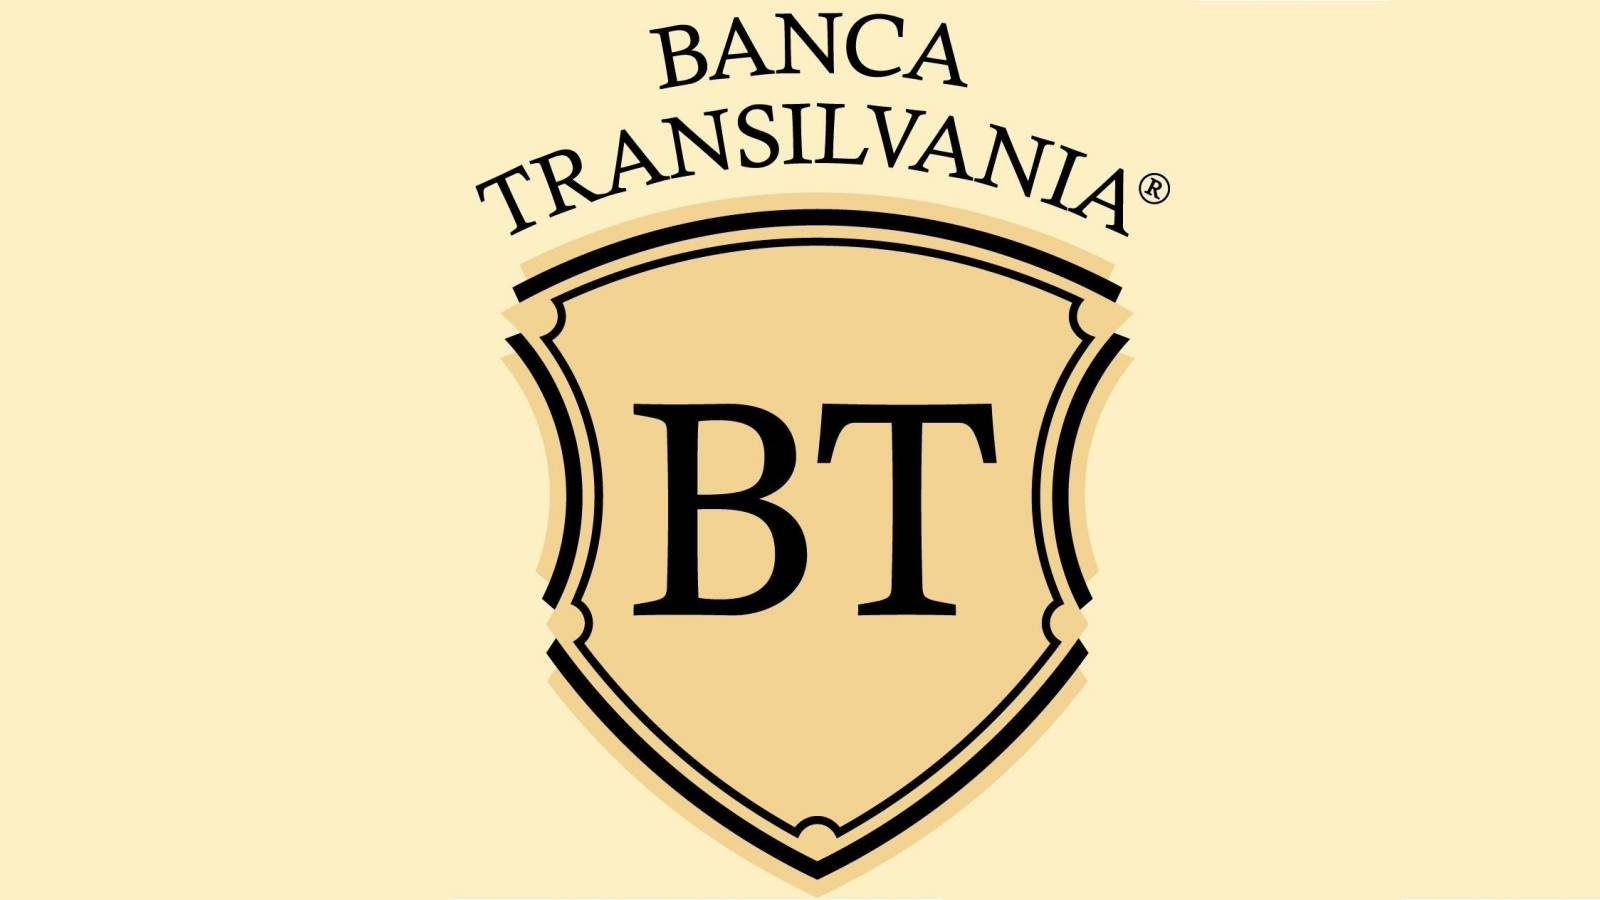 BANCA Transilvania ATENTIONARE Oficiala Clienti Masurile Impuse ANAF Romania